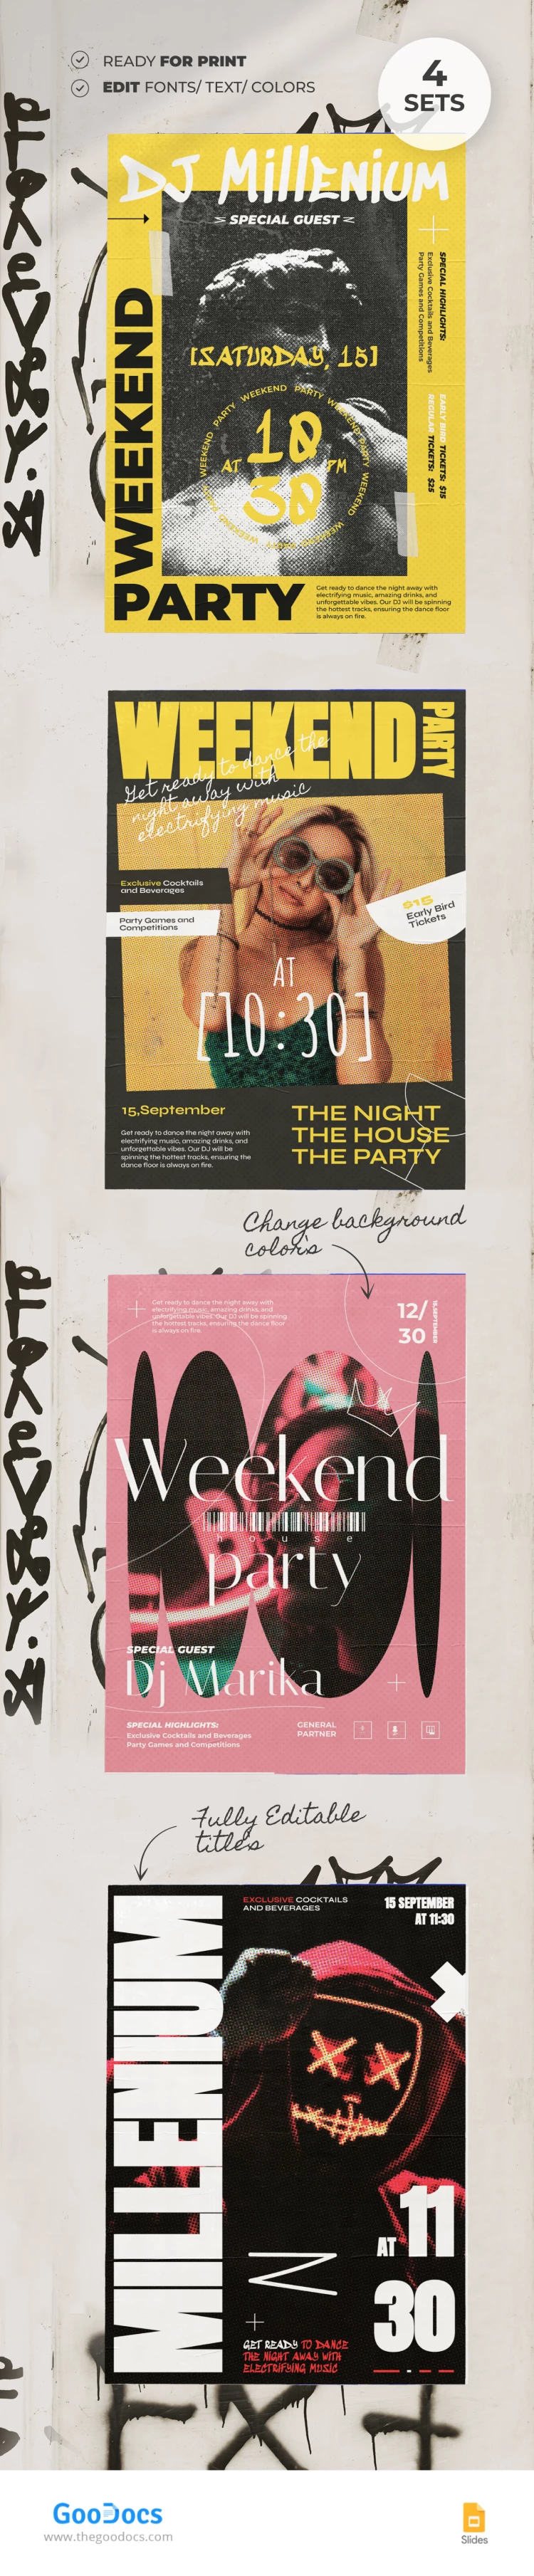 Flyer della festa del weekend - free Google Docs Template - 10068719